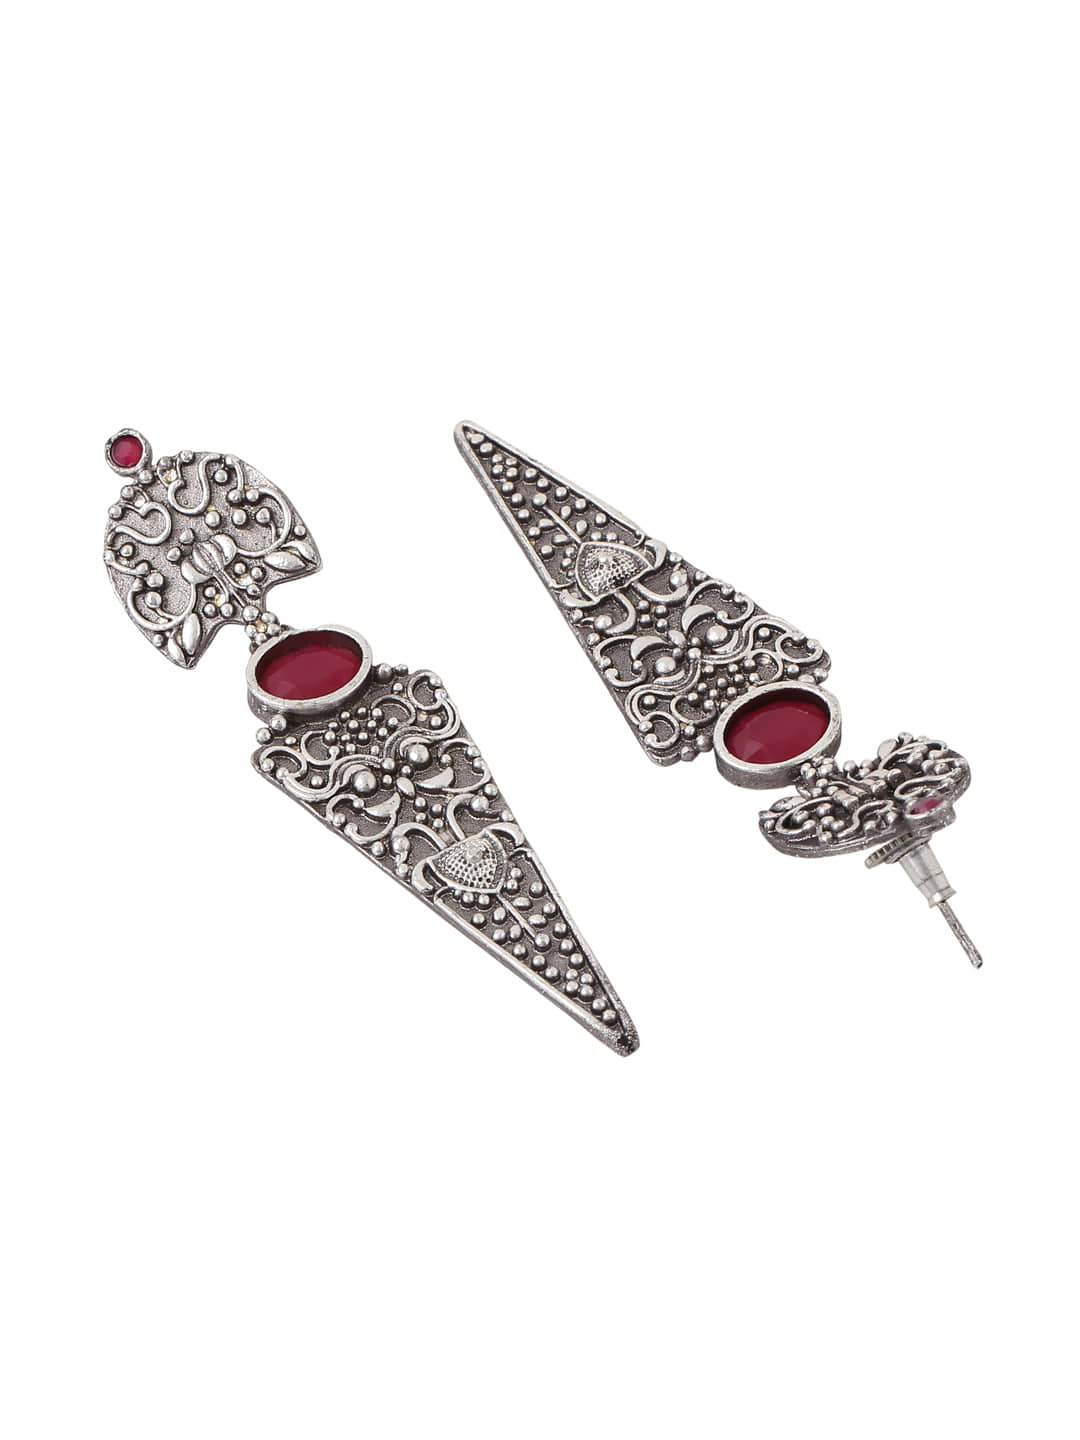 classic-oxidized-dangle-earrings-red-stone-viraasi